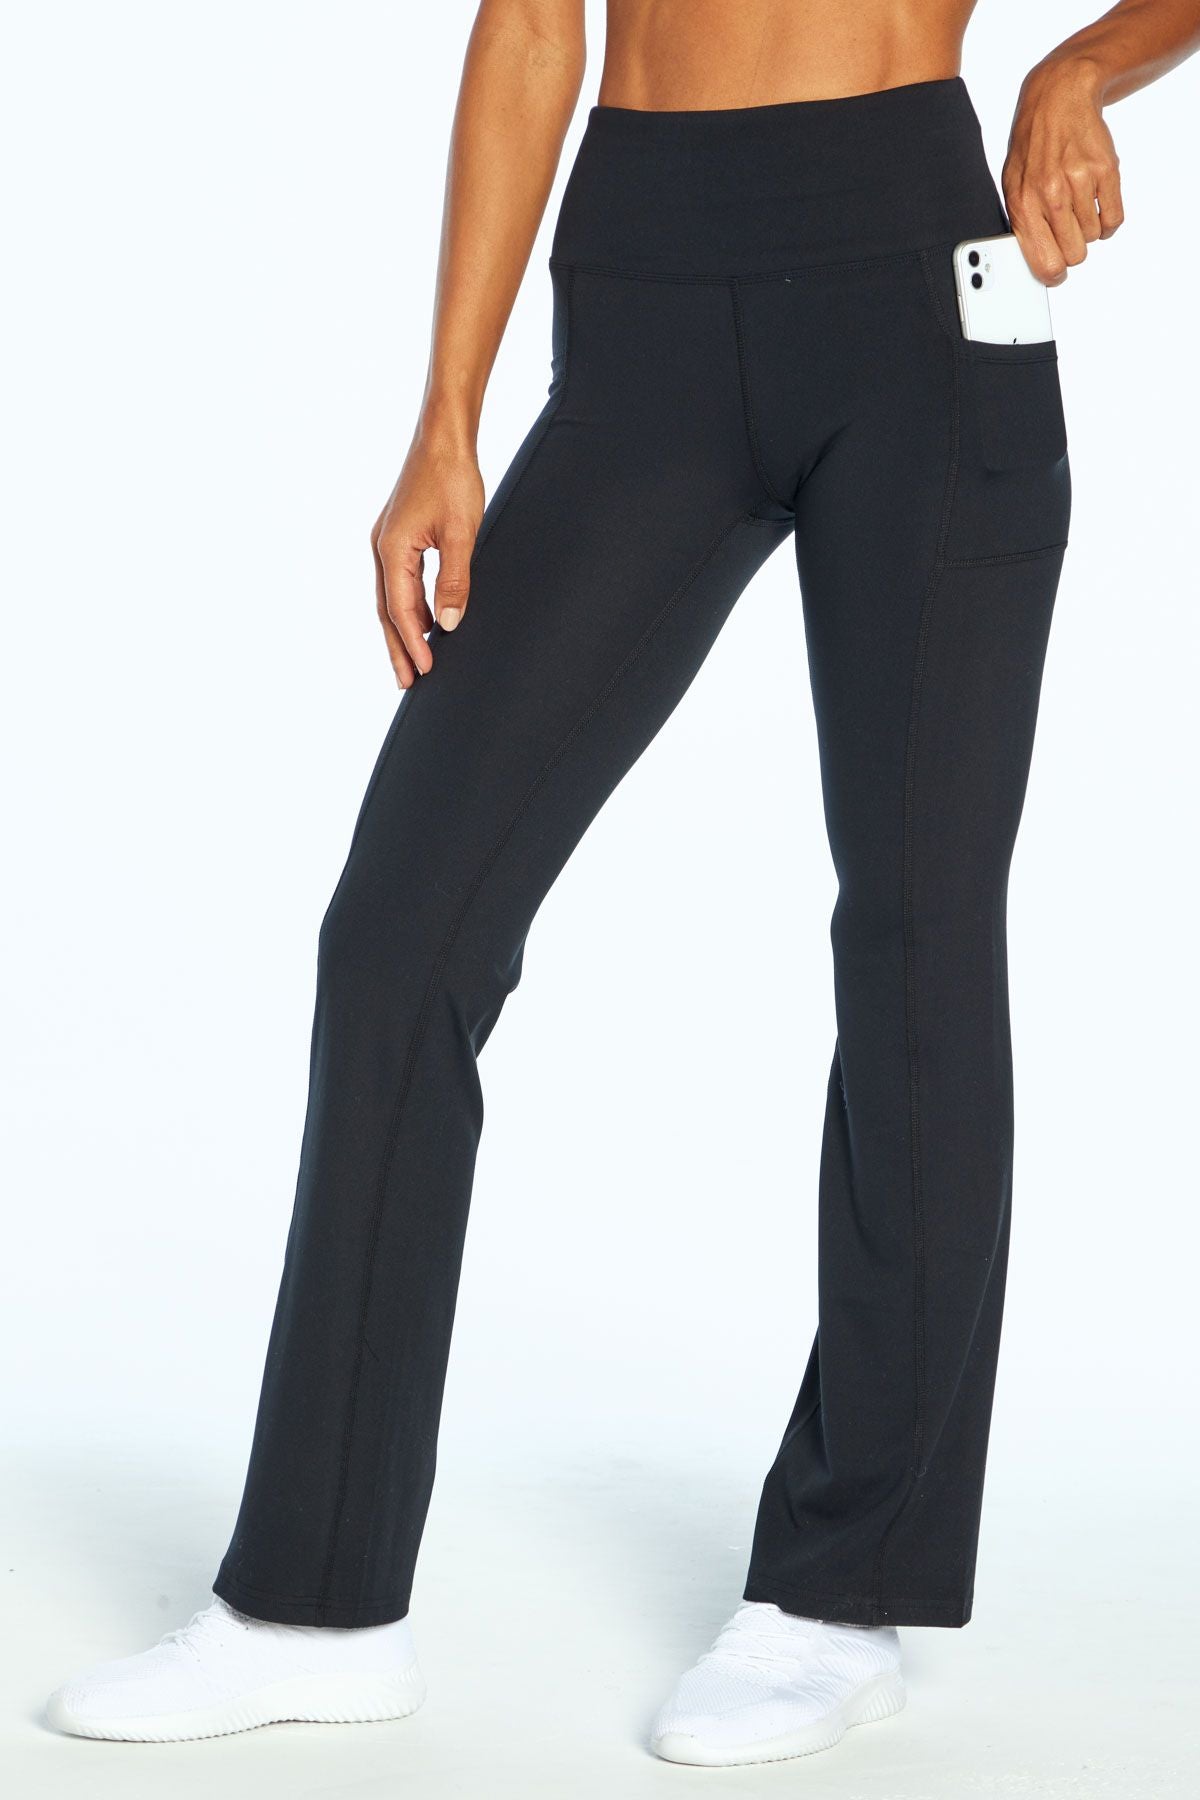 Heathyoga Women Bootcut High Waist Yoga Pants with Pockets, Black, Medium